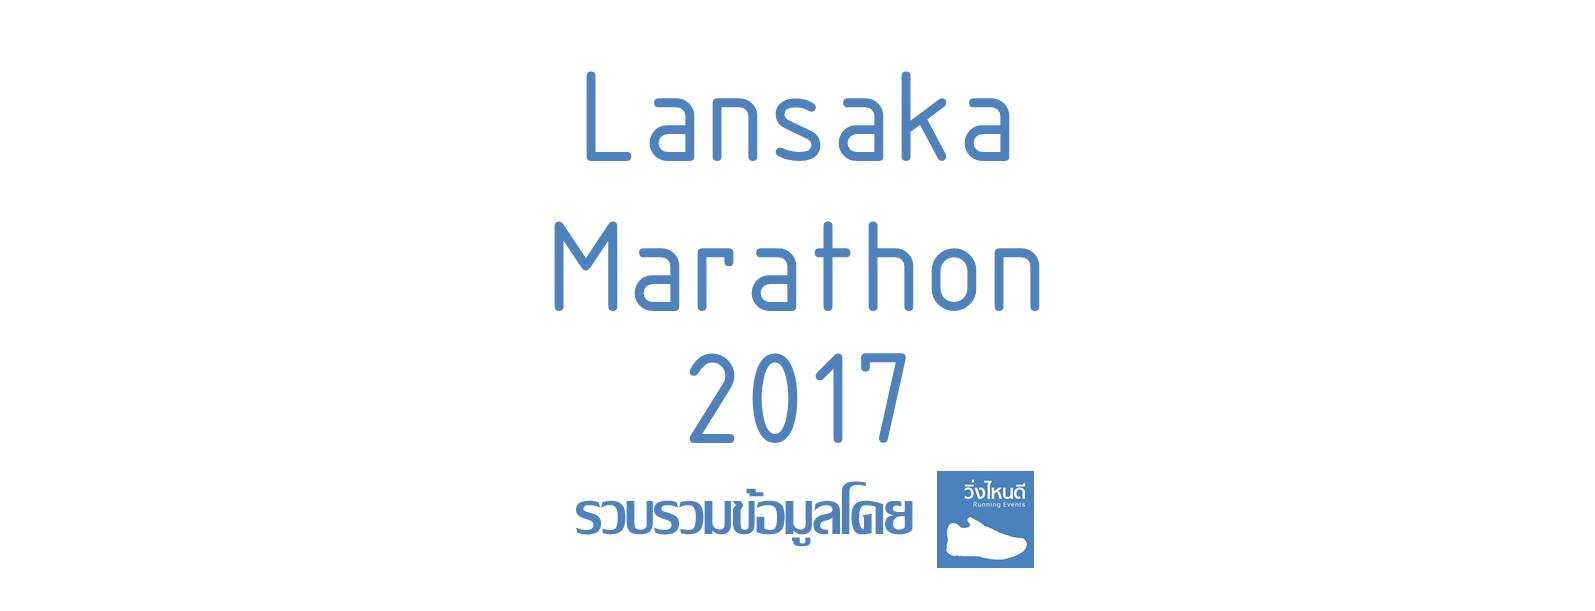 Lansaka Marathon 2017